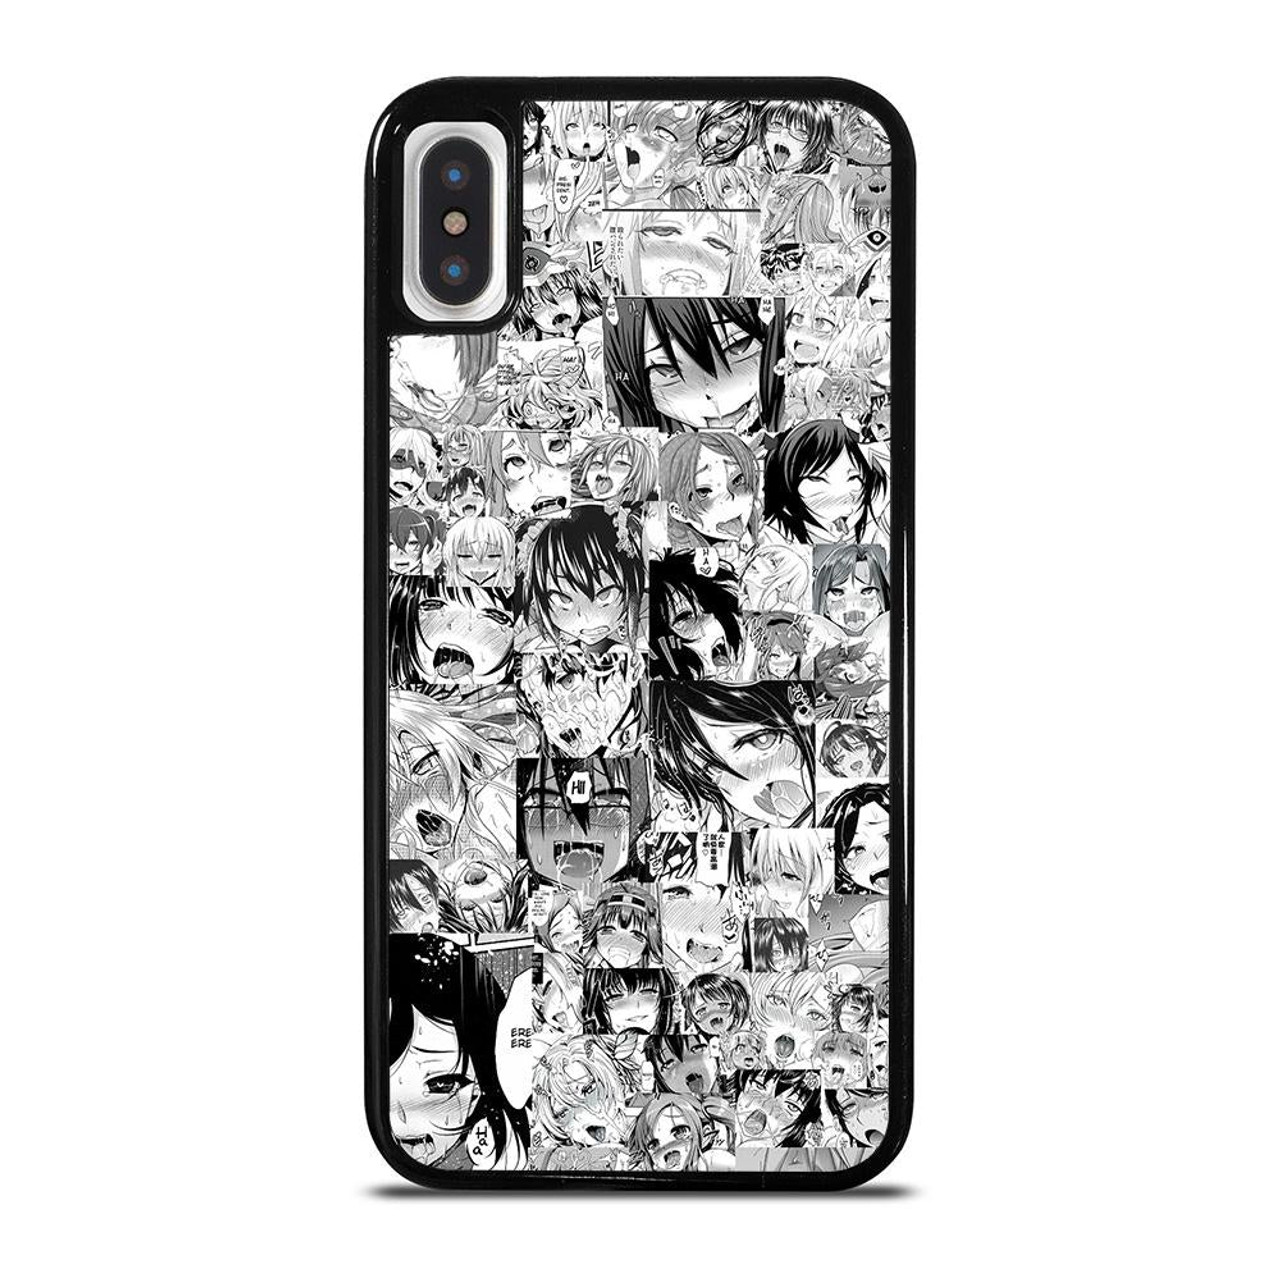 AMORVOR for iPhone X/XS Back Cover Anime Uzumaki Naruto Side design Soft  Case Liquid Silicone Phone Cases